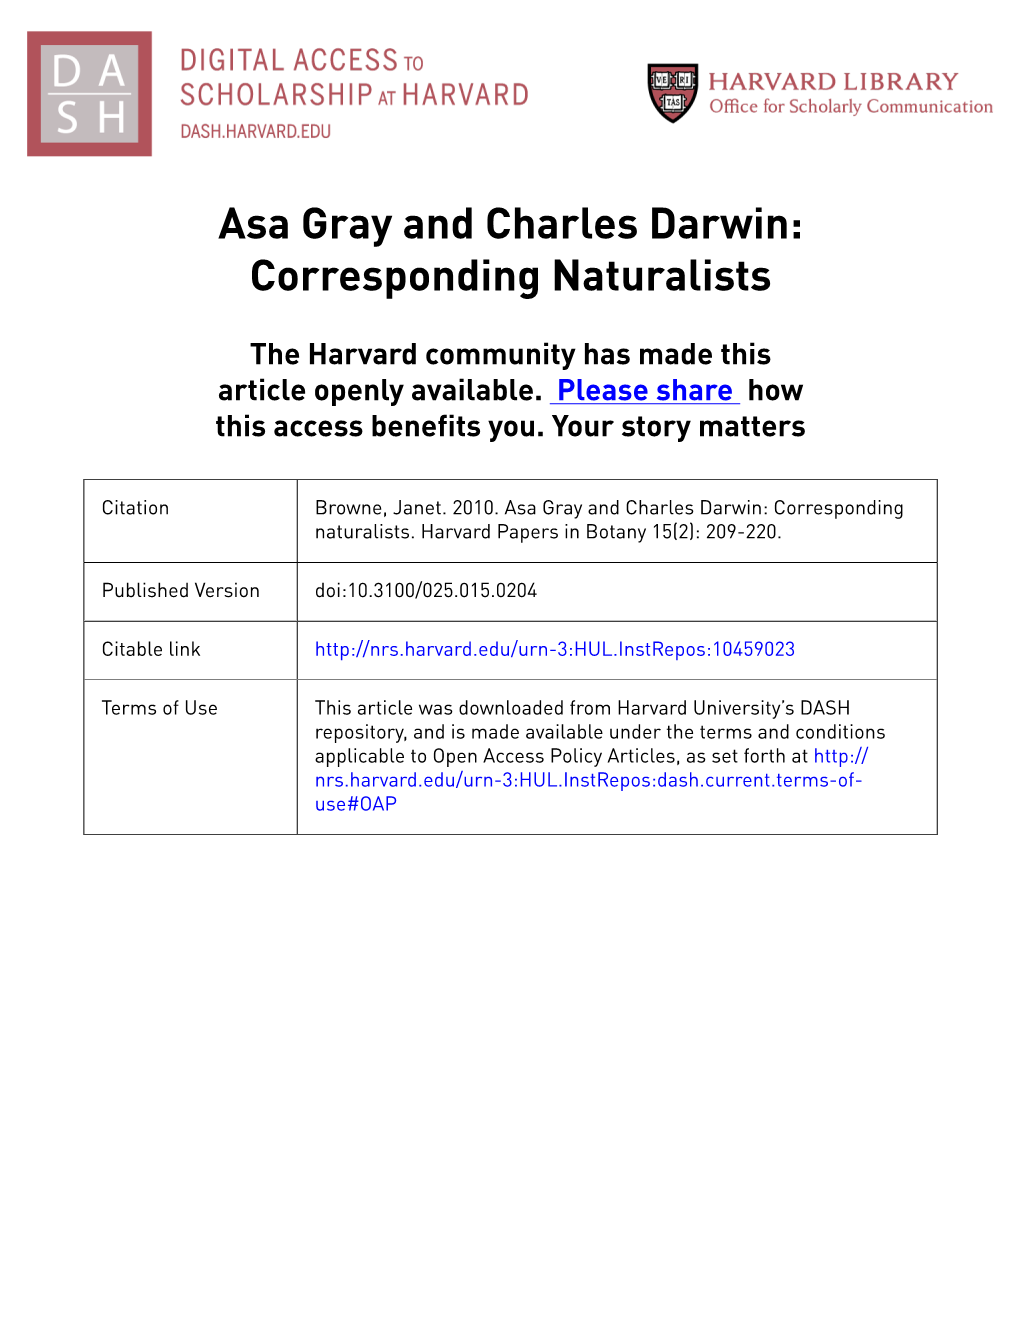 Asa Gray and Charles Darwin: Corresponding Naturalists